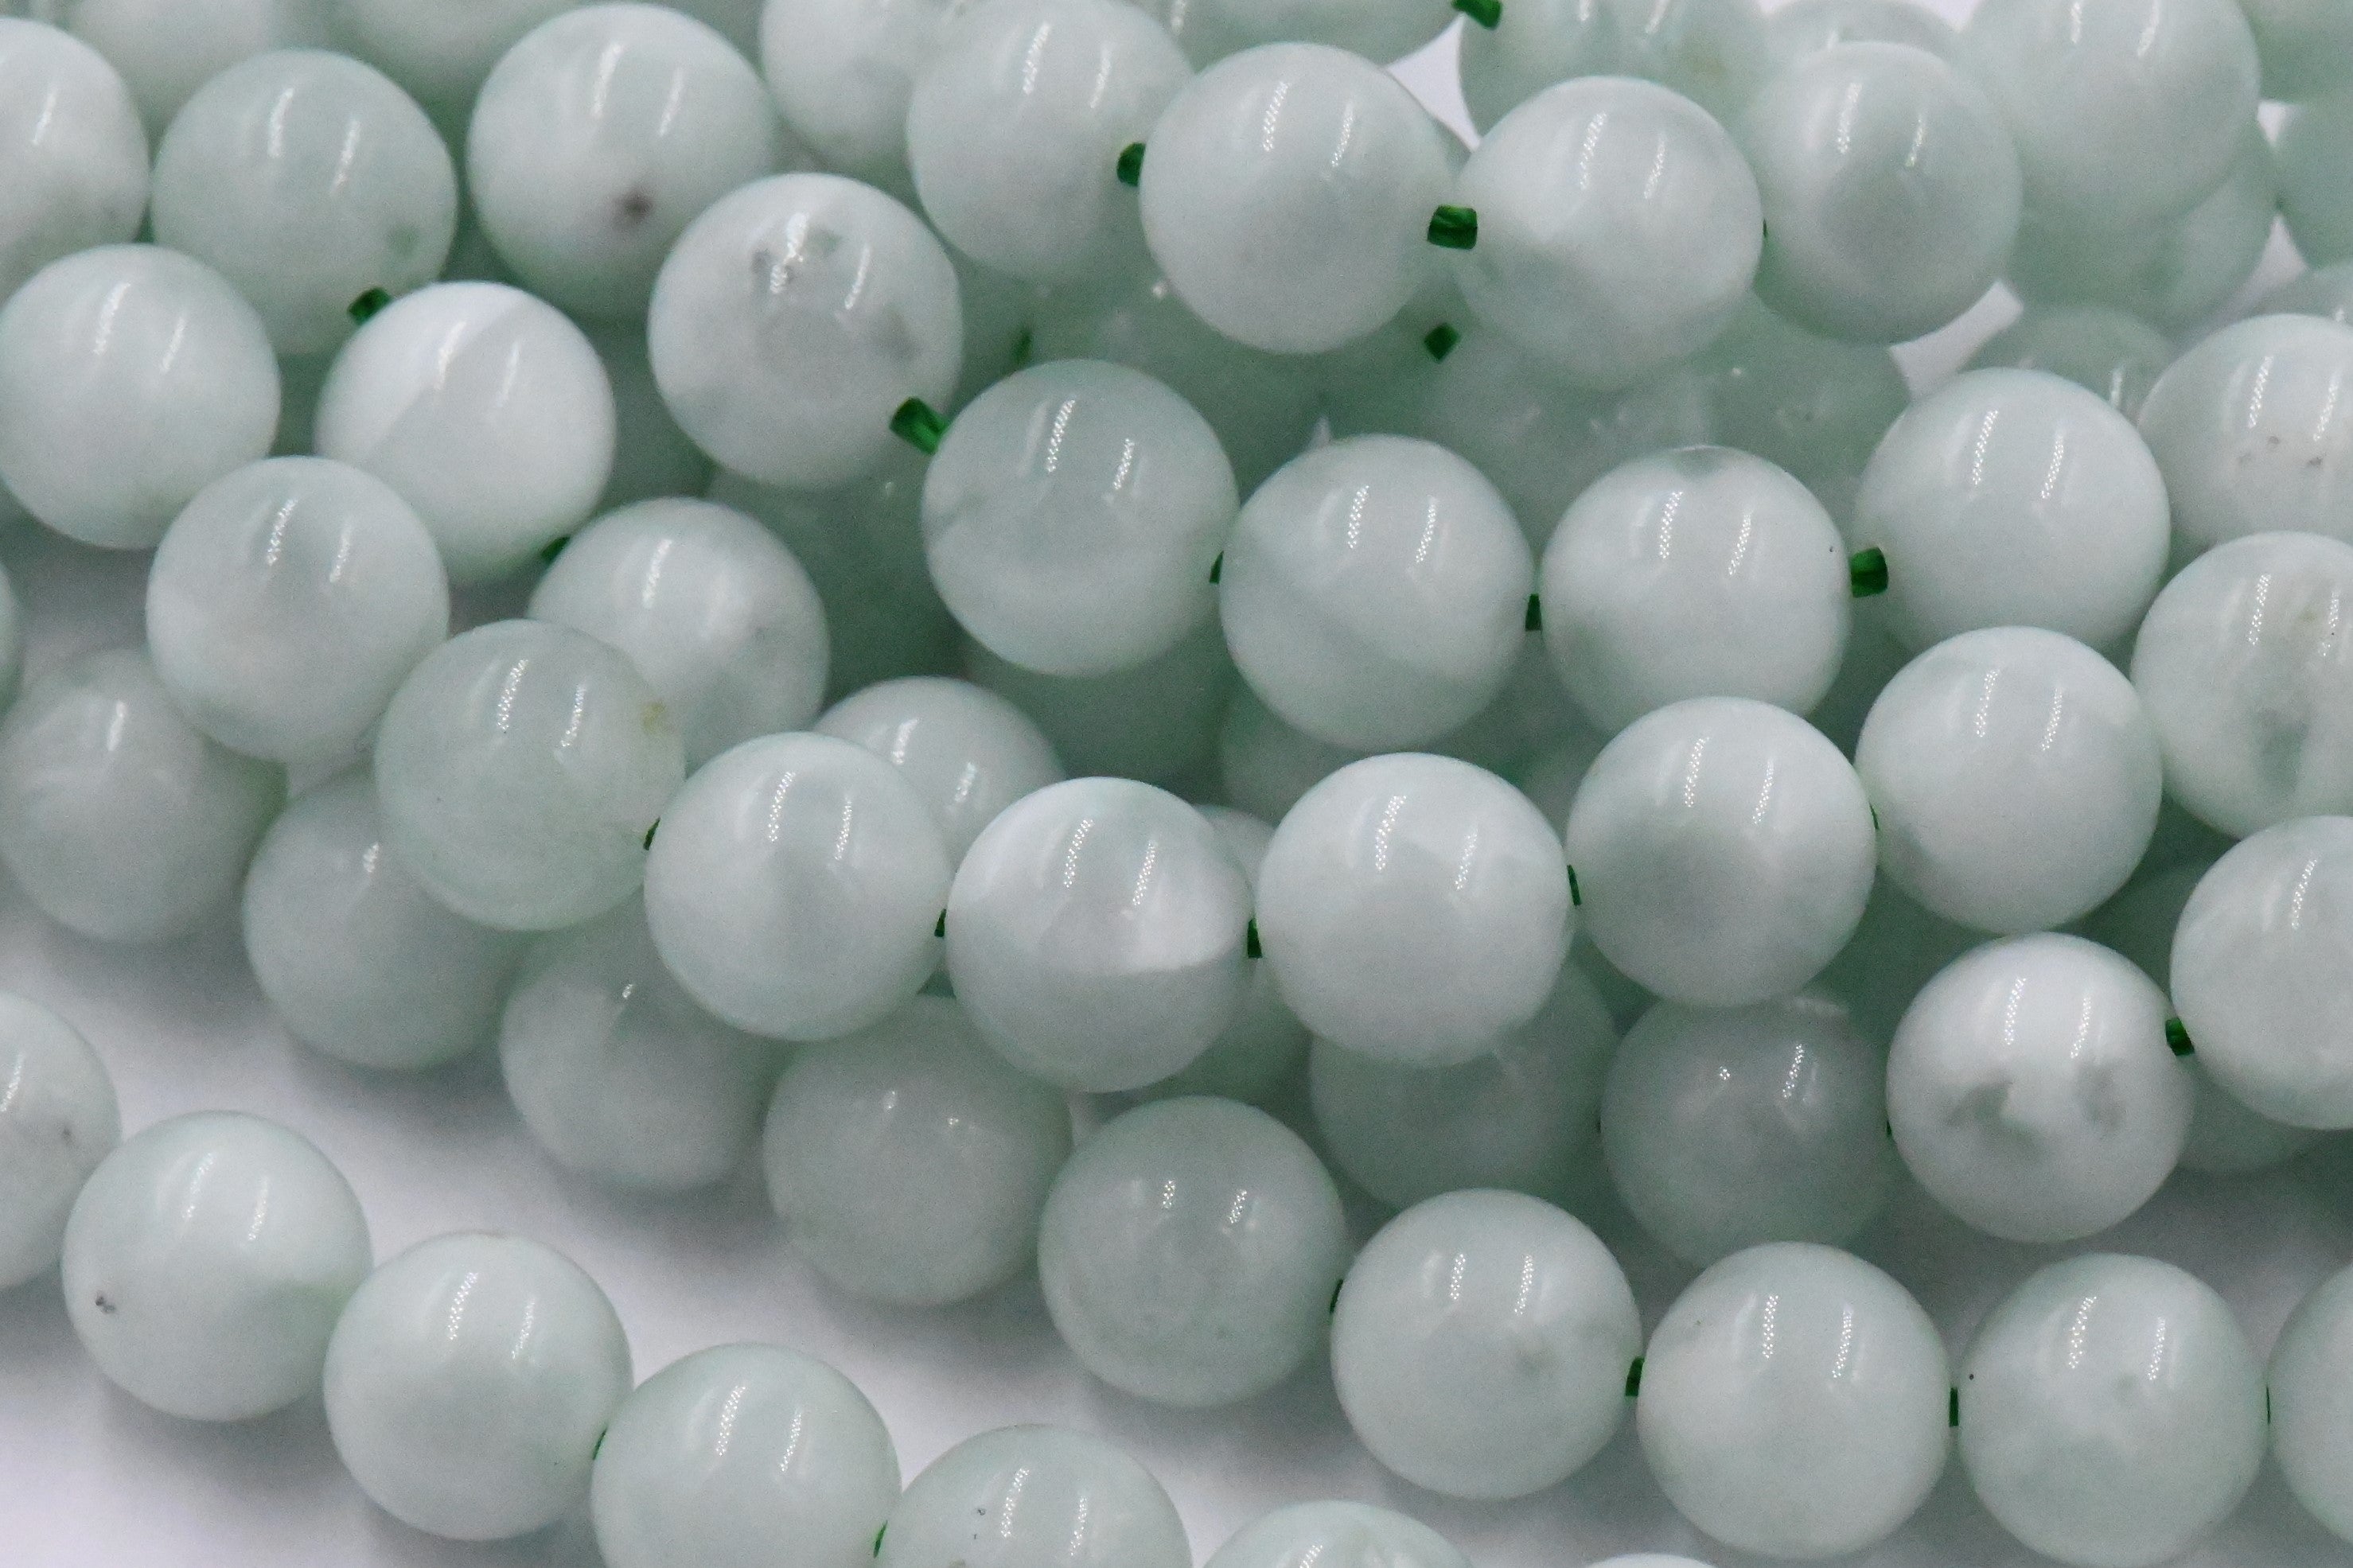 Green  Angelite 6mm, 8mm, 10mm round beads -15.5 inch strand